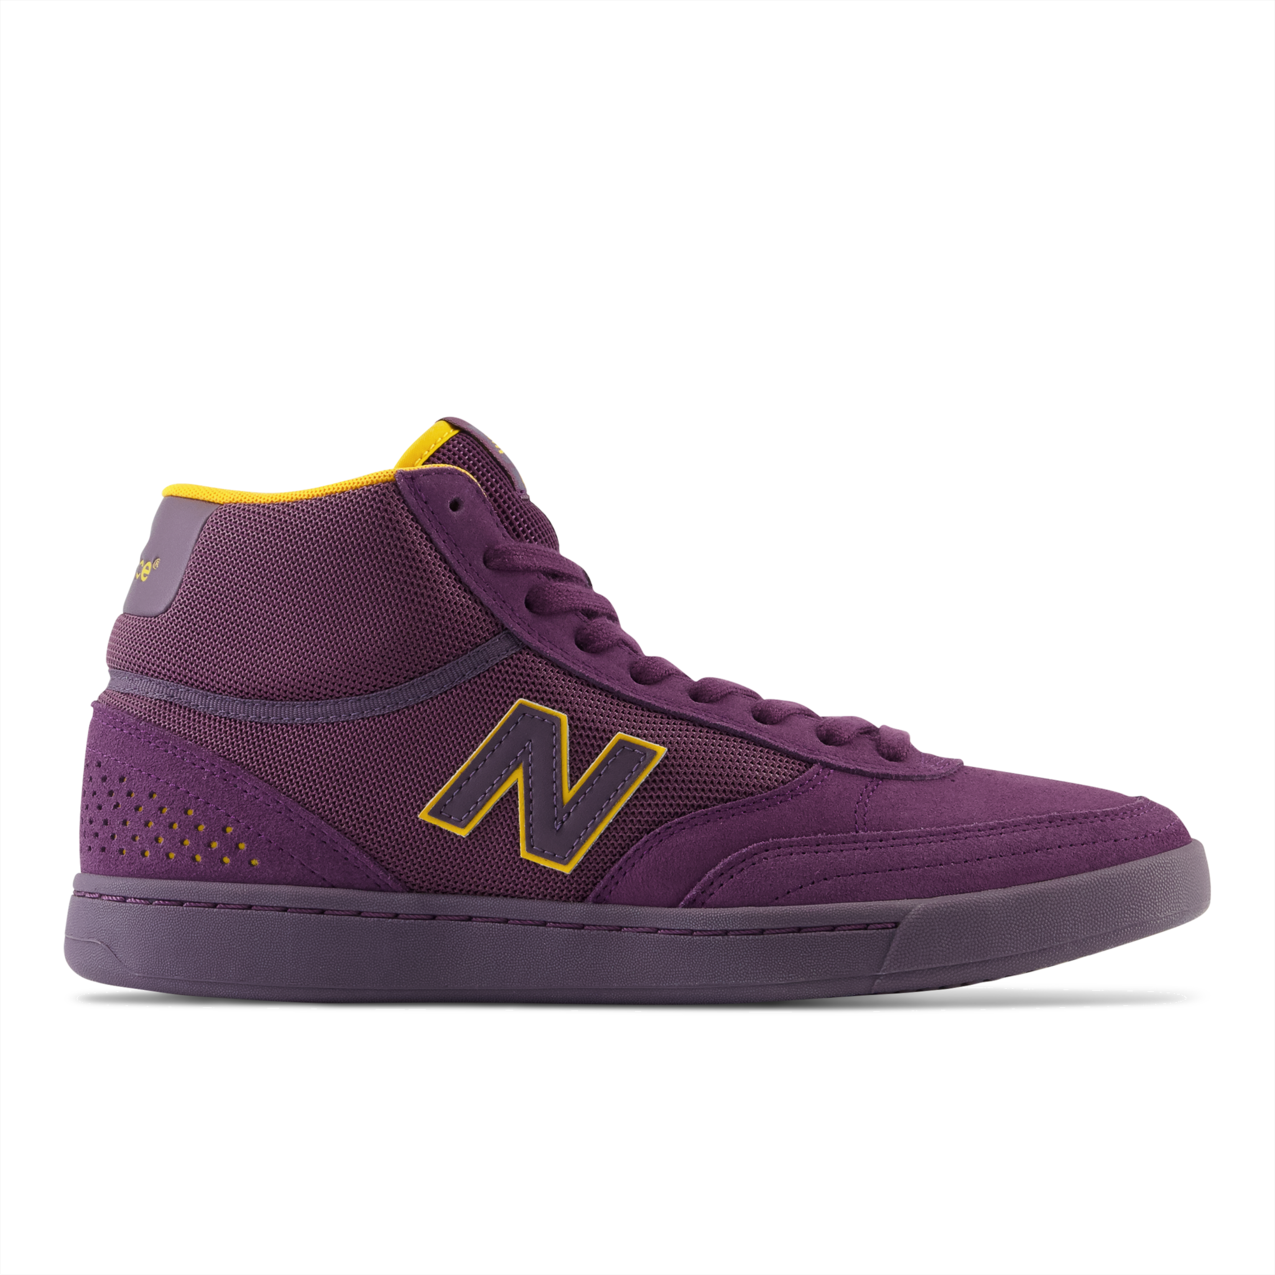 New Balance Numeric Men's 440 High Purple Yellow Shoes